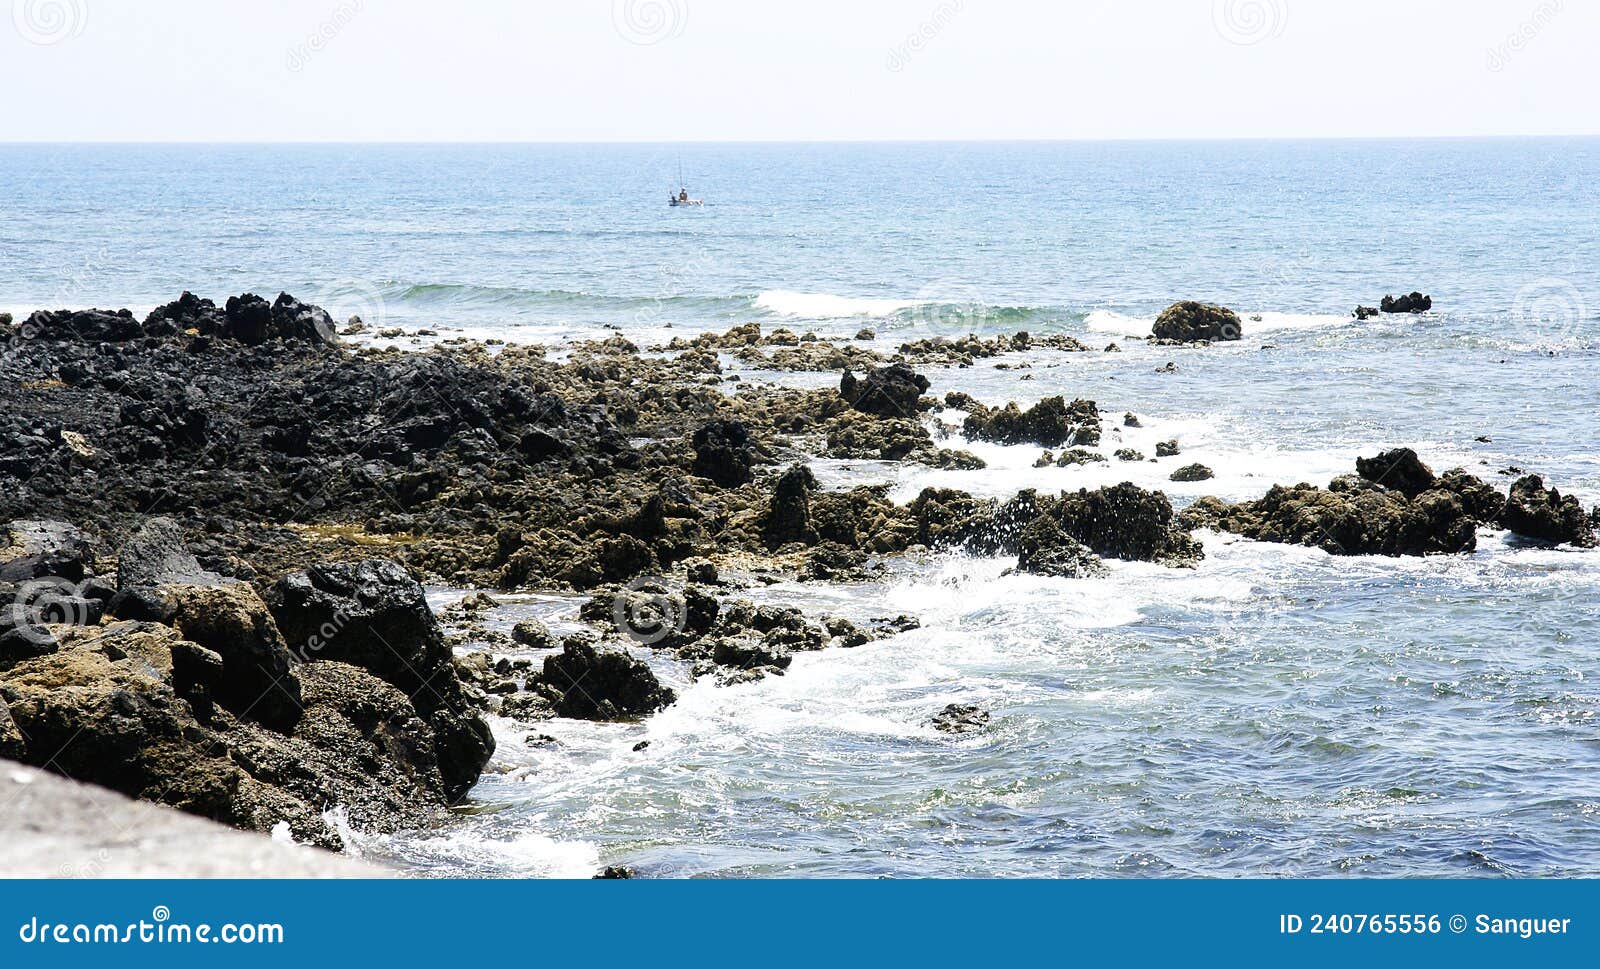 arrieta on the coast of lanzarote